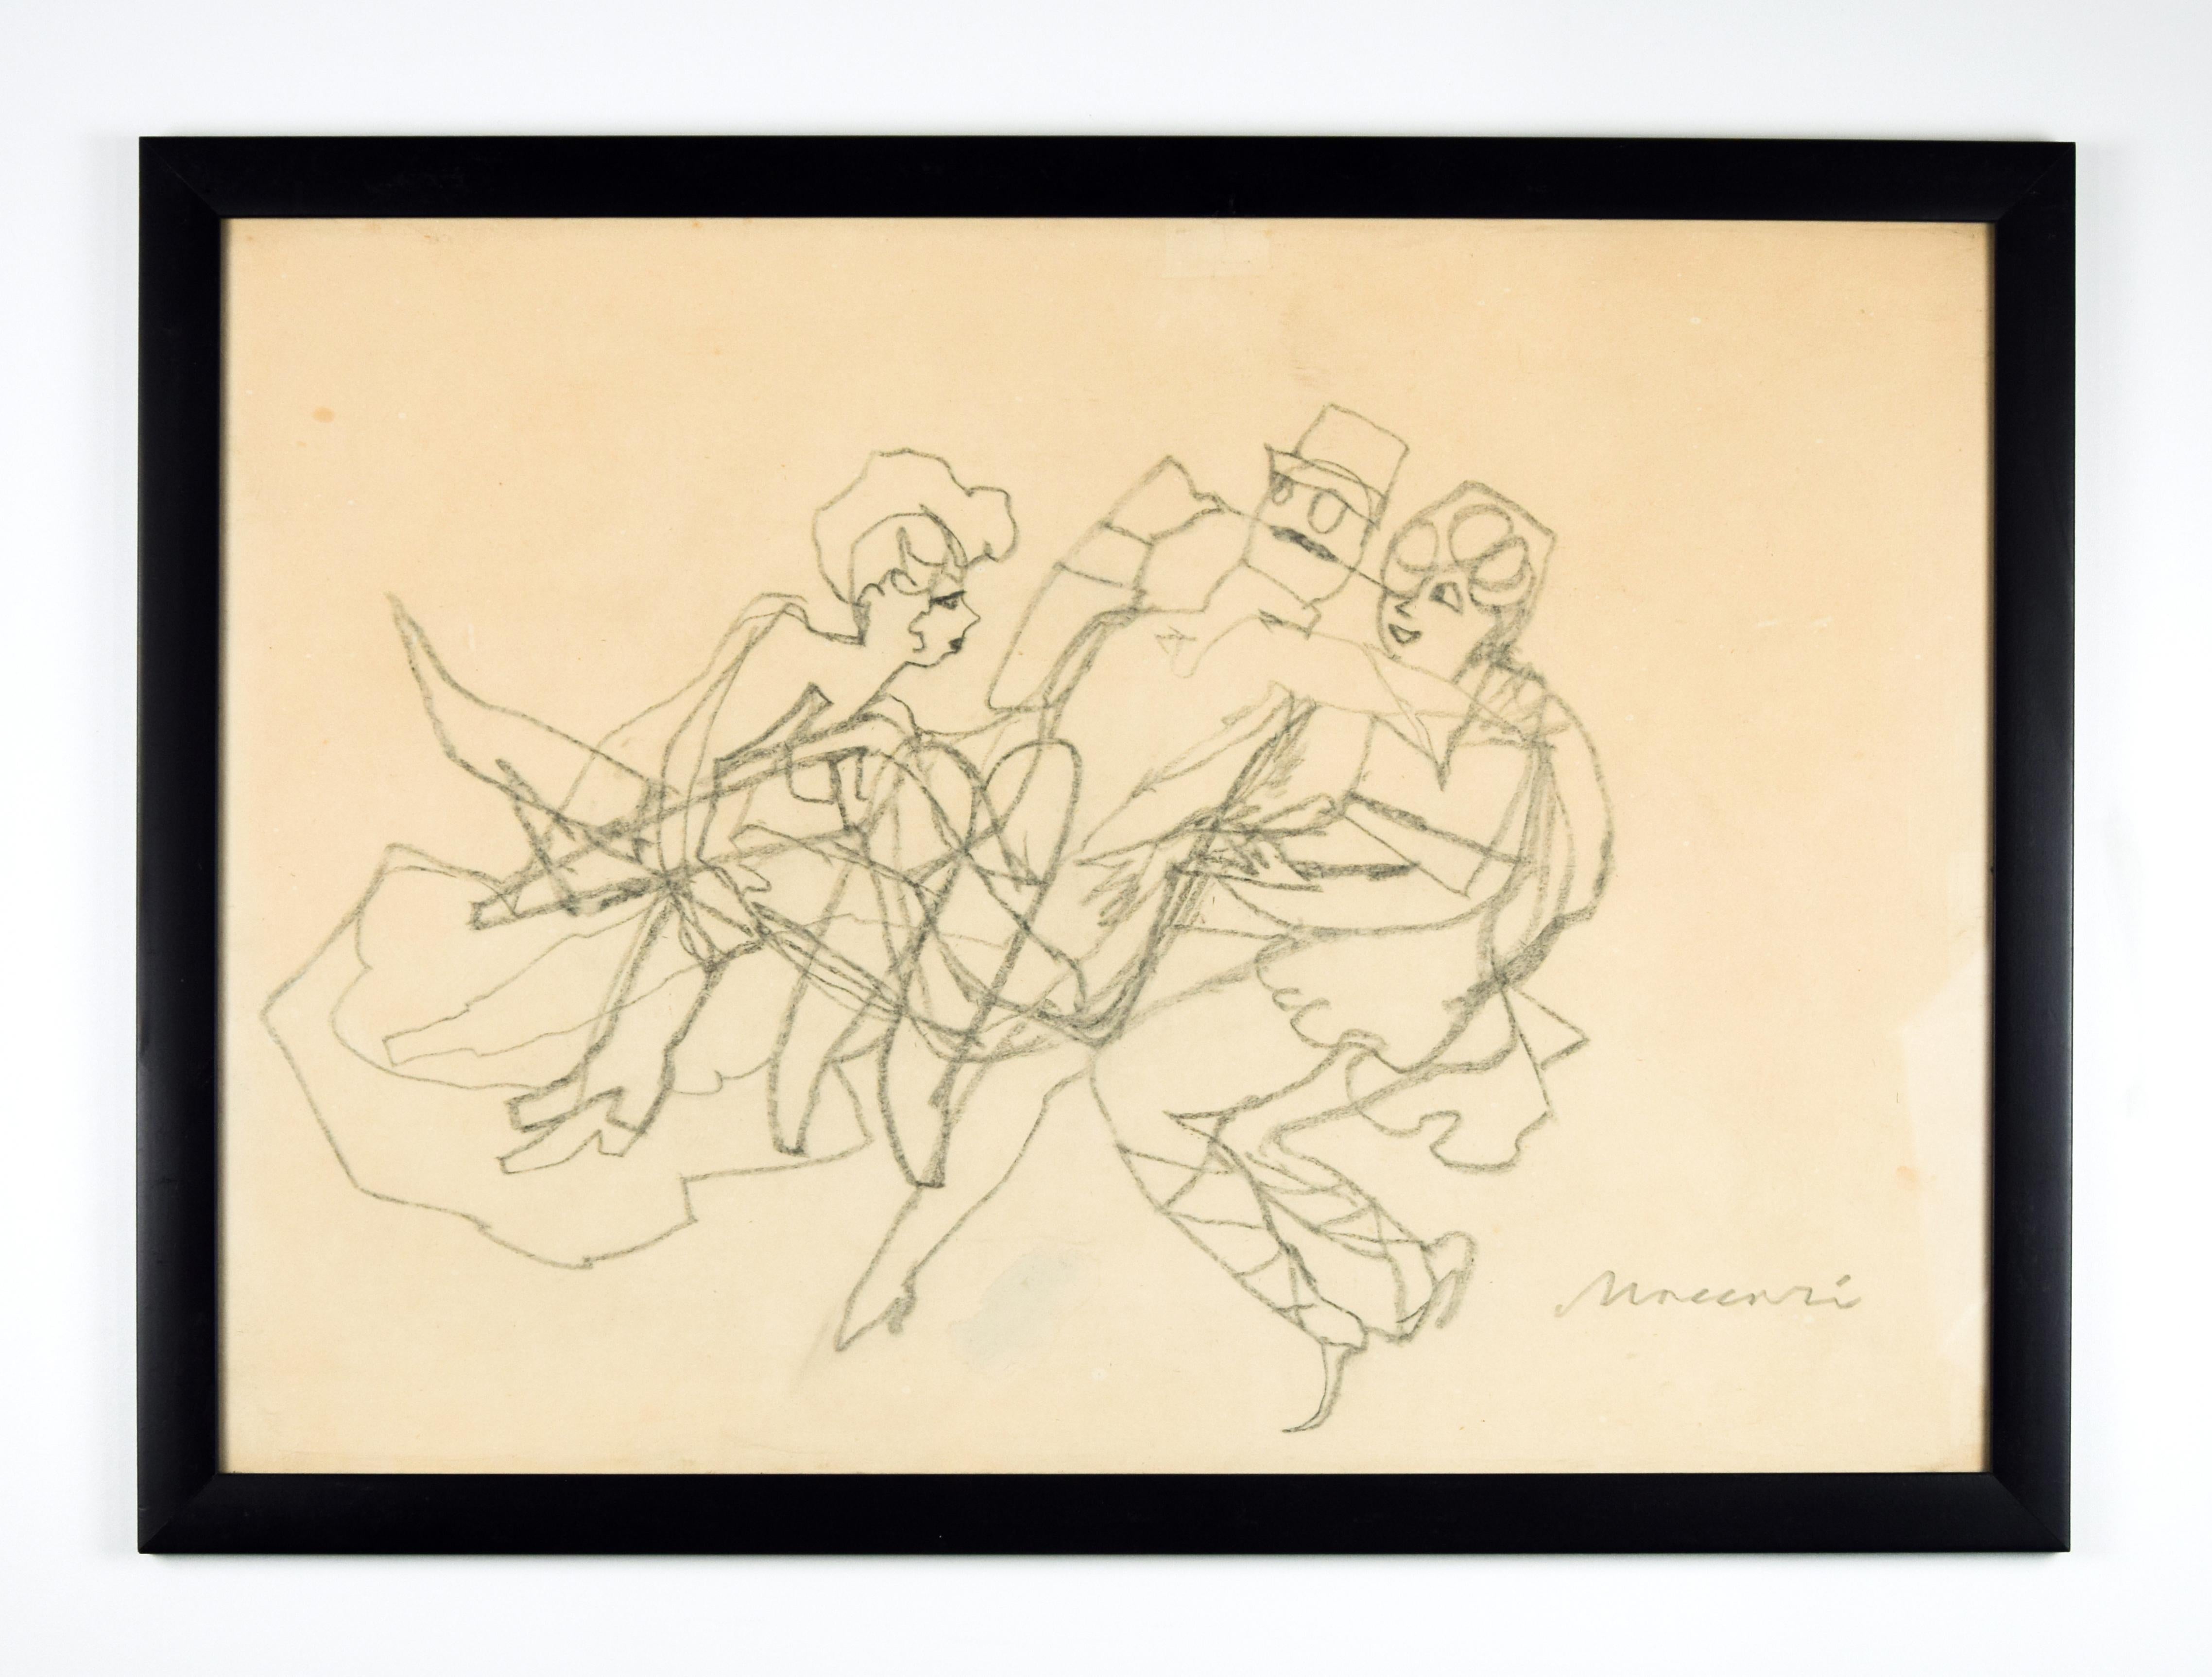  Mino Maccari Figurative Art - Official Entertainment - Charcoal Drawing by M. Maccari - 1950s